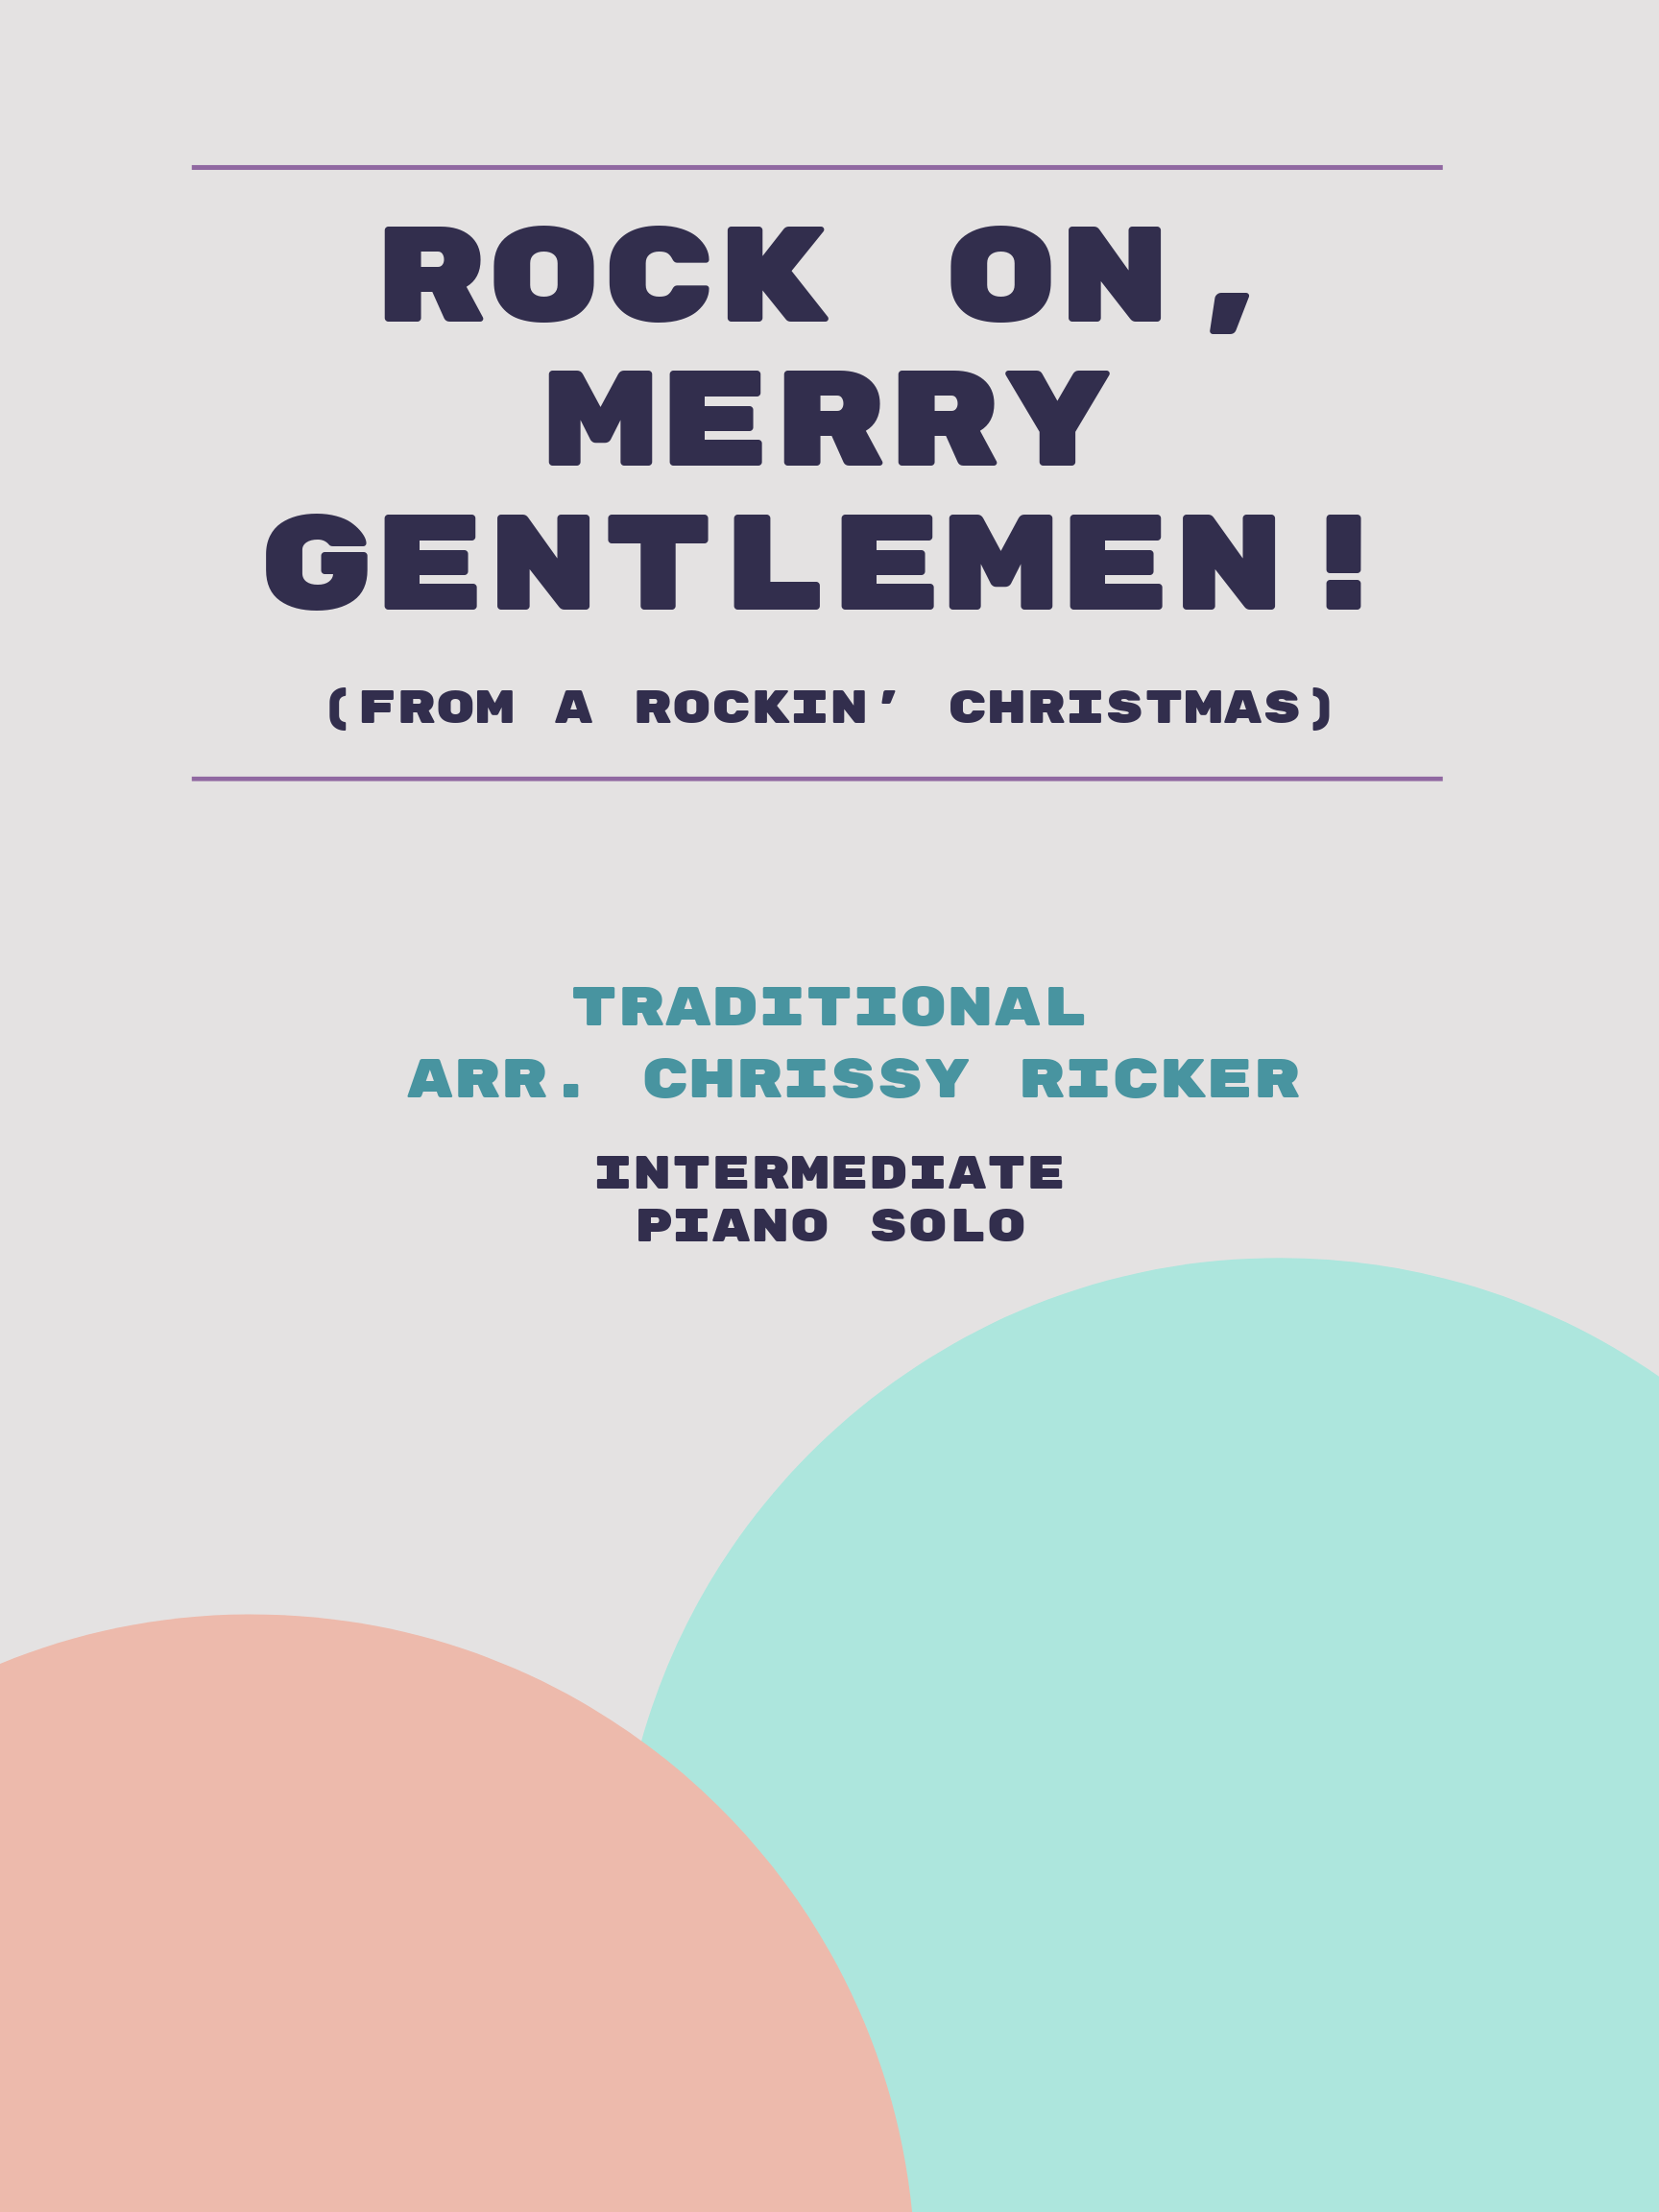 Rock On, Merry Gentlemen! Sample Page